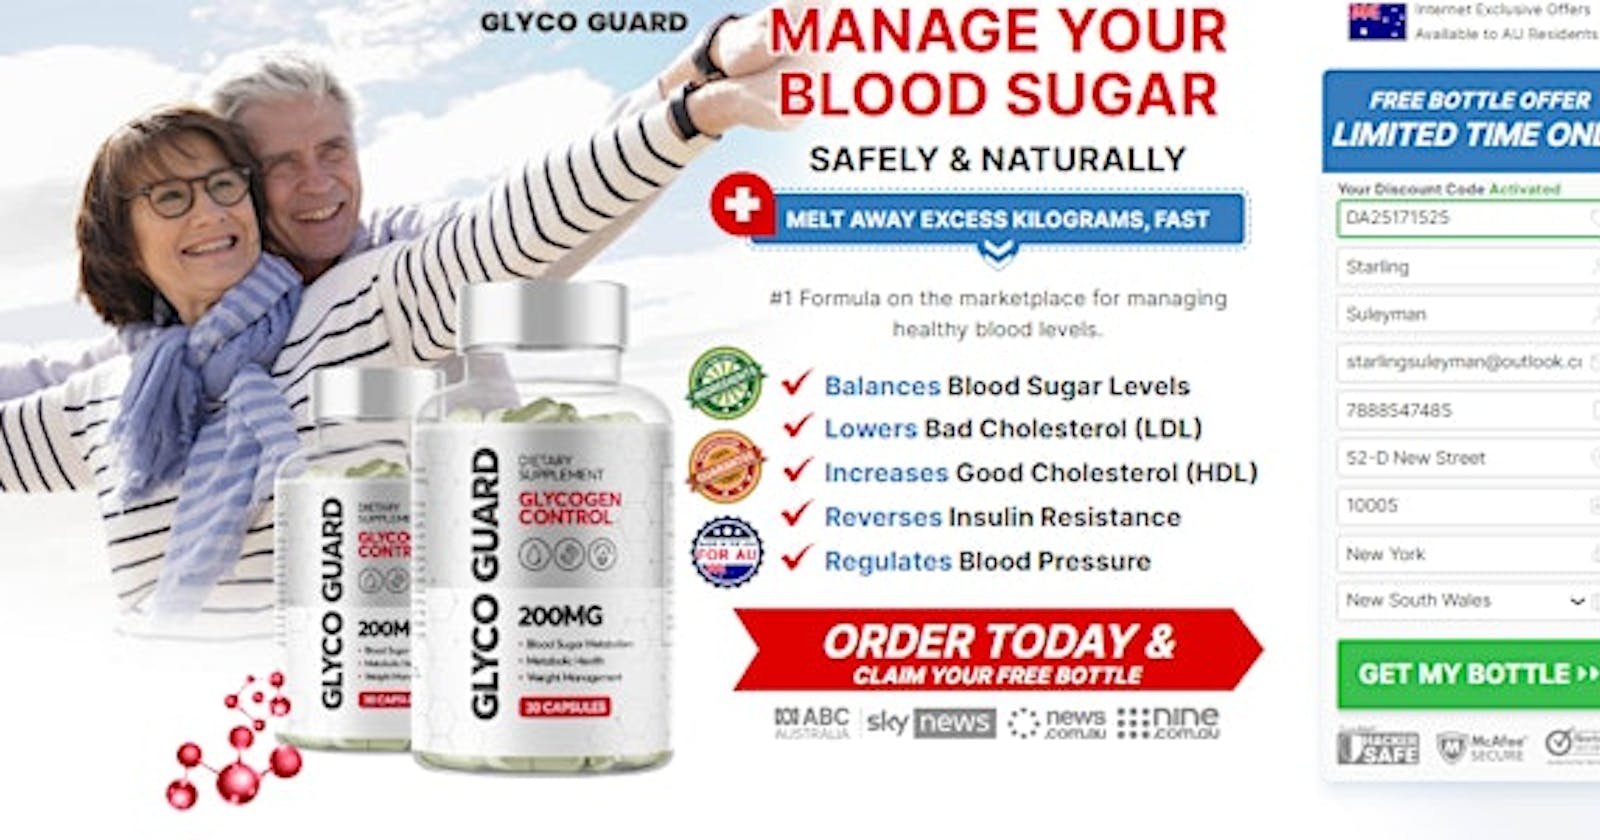 Glycogen Control Reviews [Get 50% Off] Buy Now